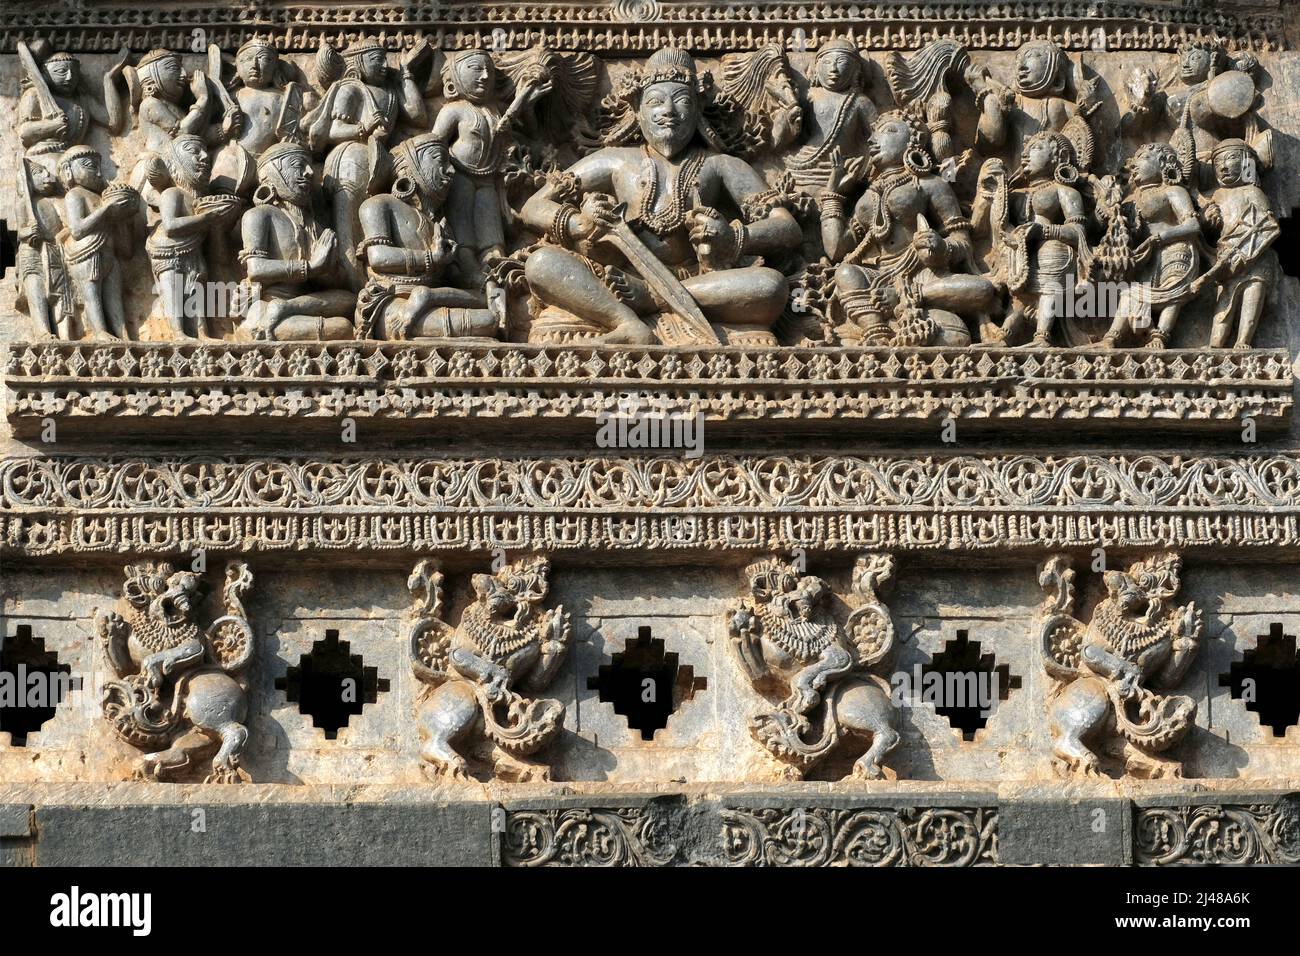 Belur, Karnataka, India - Dicembre 19 2021, sculture e sculture dei templi di Belur e Halebidu, templi di Hoysala - Tempio di Chennakeshava. Foto Stock